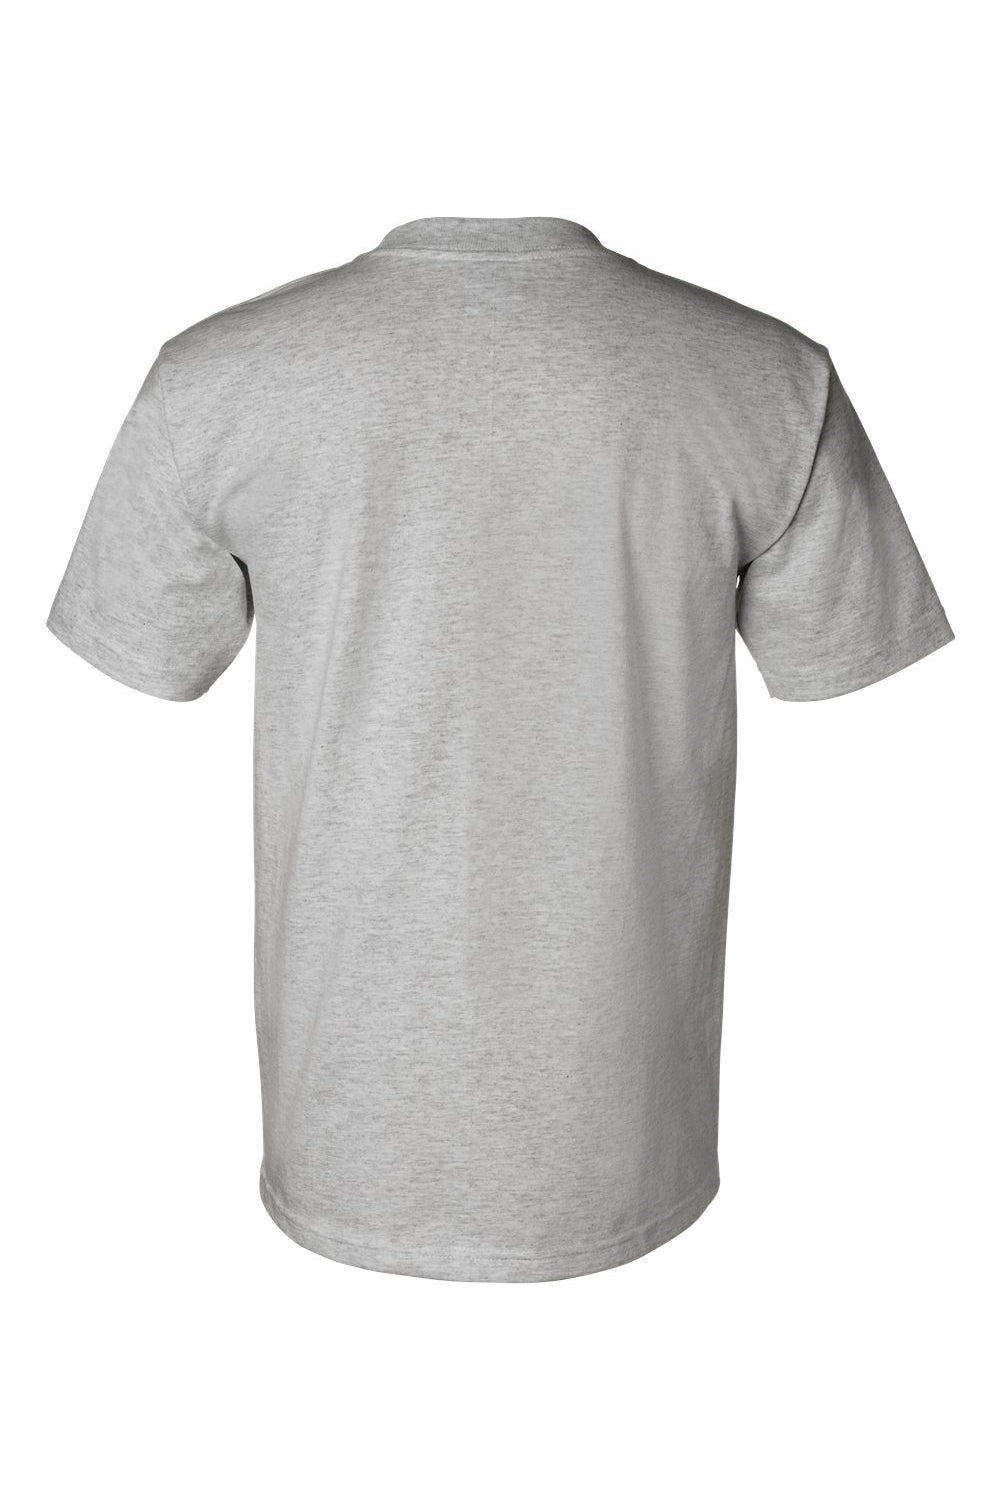 Bayside BA5100 Mens USA Made Short Sleeve Crewneck T-Shirt Dark Ash Grey Flat Back